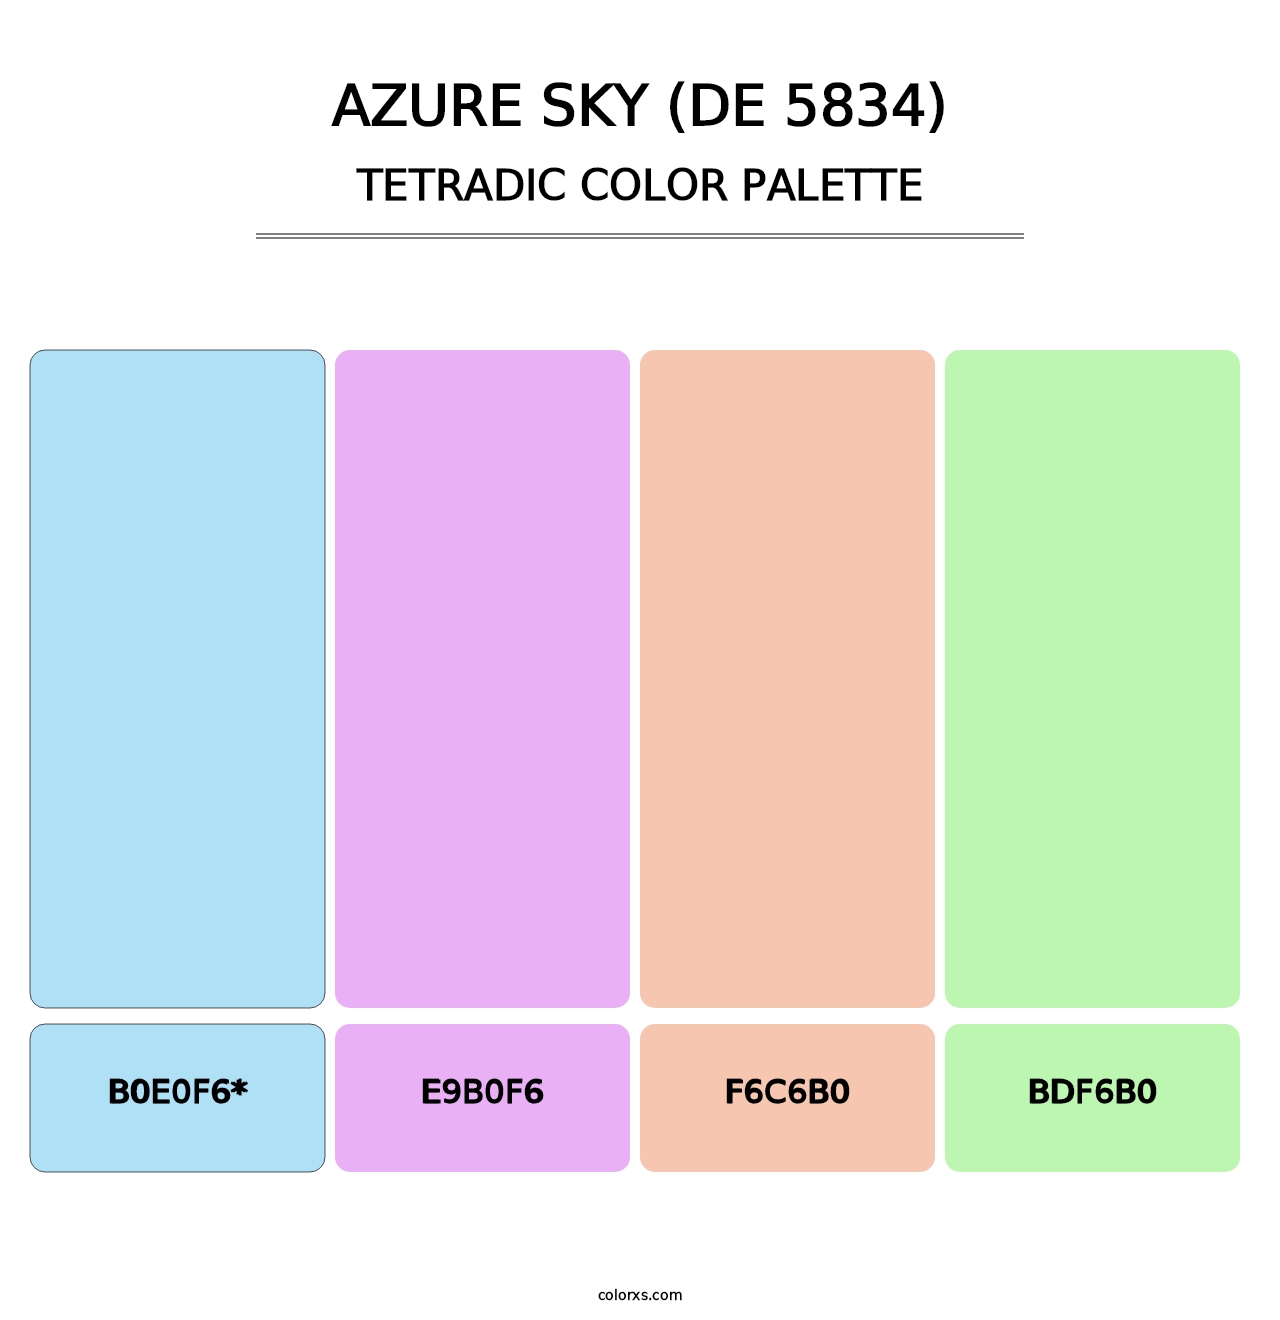 Azure Sky (DE 5834) - Tetradic Color Palette